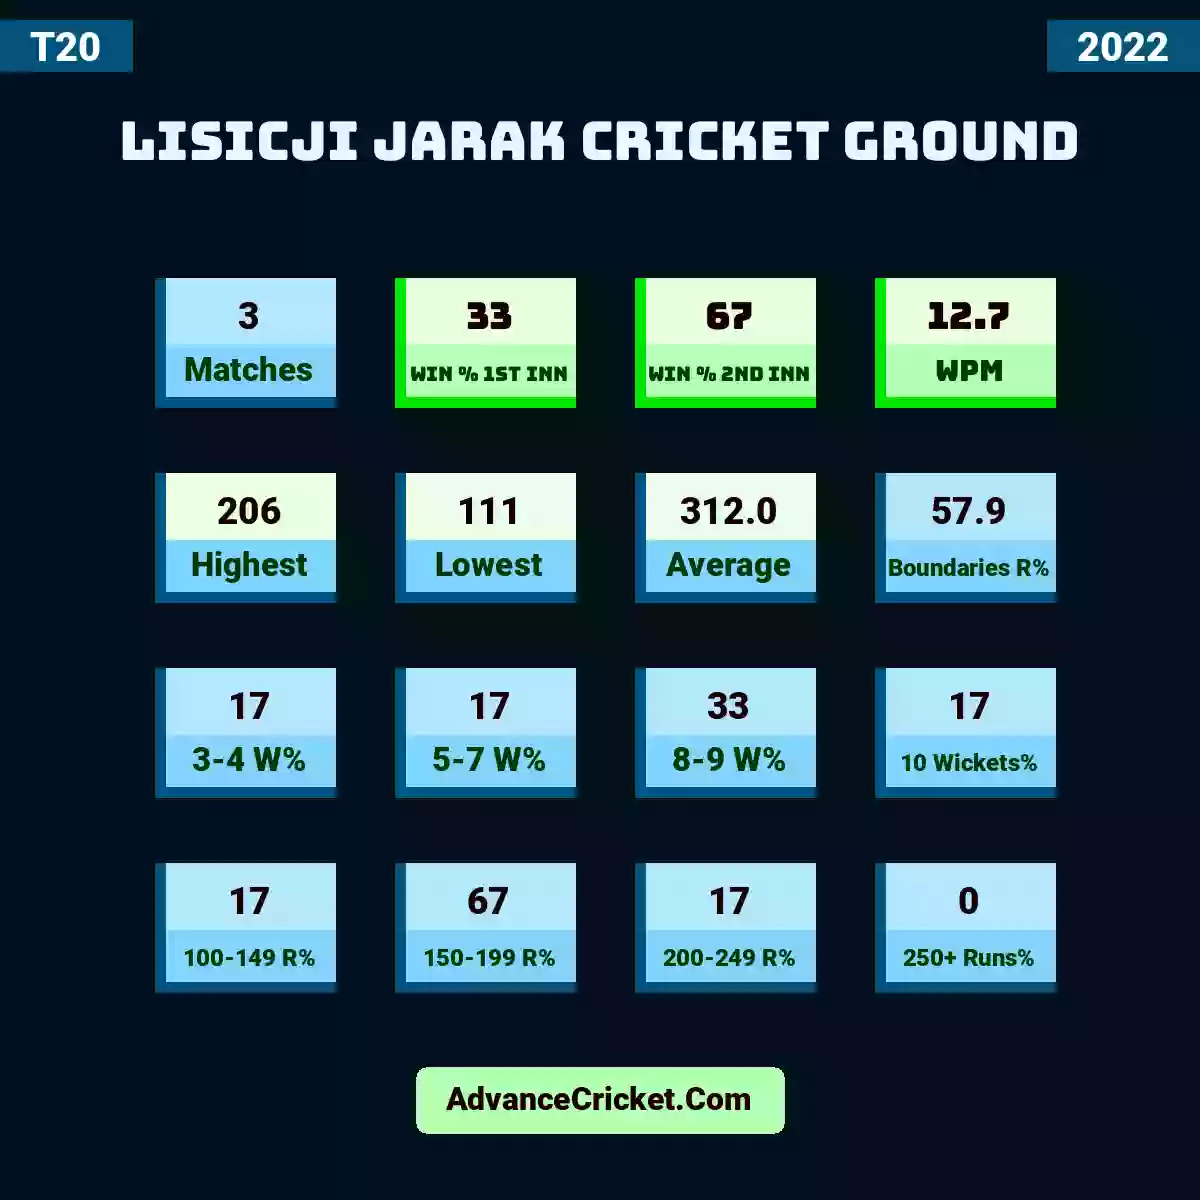 Image showing Lisicji Jarak Cricket Ground with Matches: 3, Win % 1st Inn: 33, Win % 2nd Inn: 67, WPM: 12.7, Highest: 206, Lowest: 111, Average: 312.0, Boundaries R%: 57.9, 3-4 W%: 17, 5-7 W%: 17, 8-9 W%: 33, 10 Wickets%: 17, 100-149 R%: 17, 150-199 R%: 67, 200-249 R%: 17, 250+ Runs%: 0.